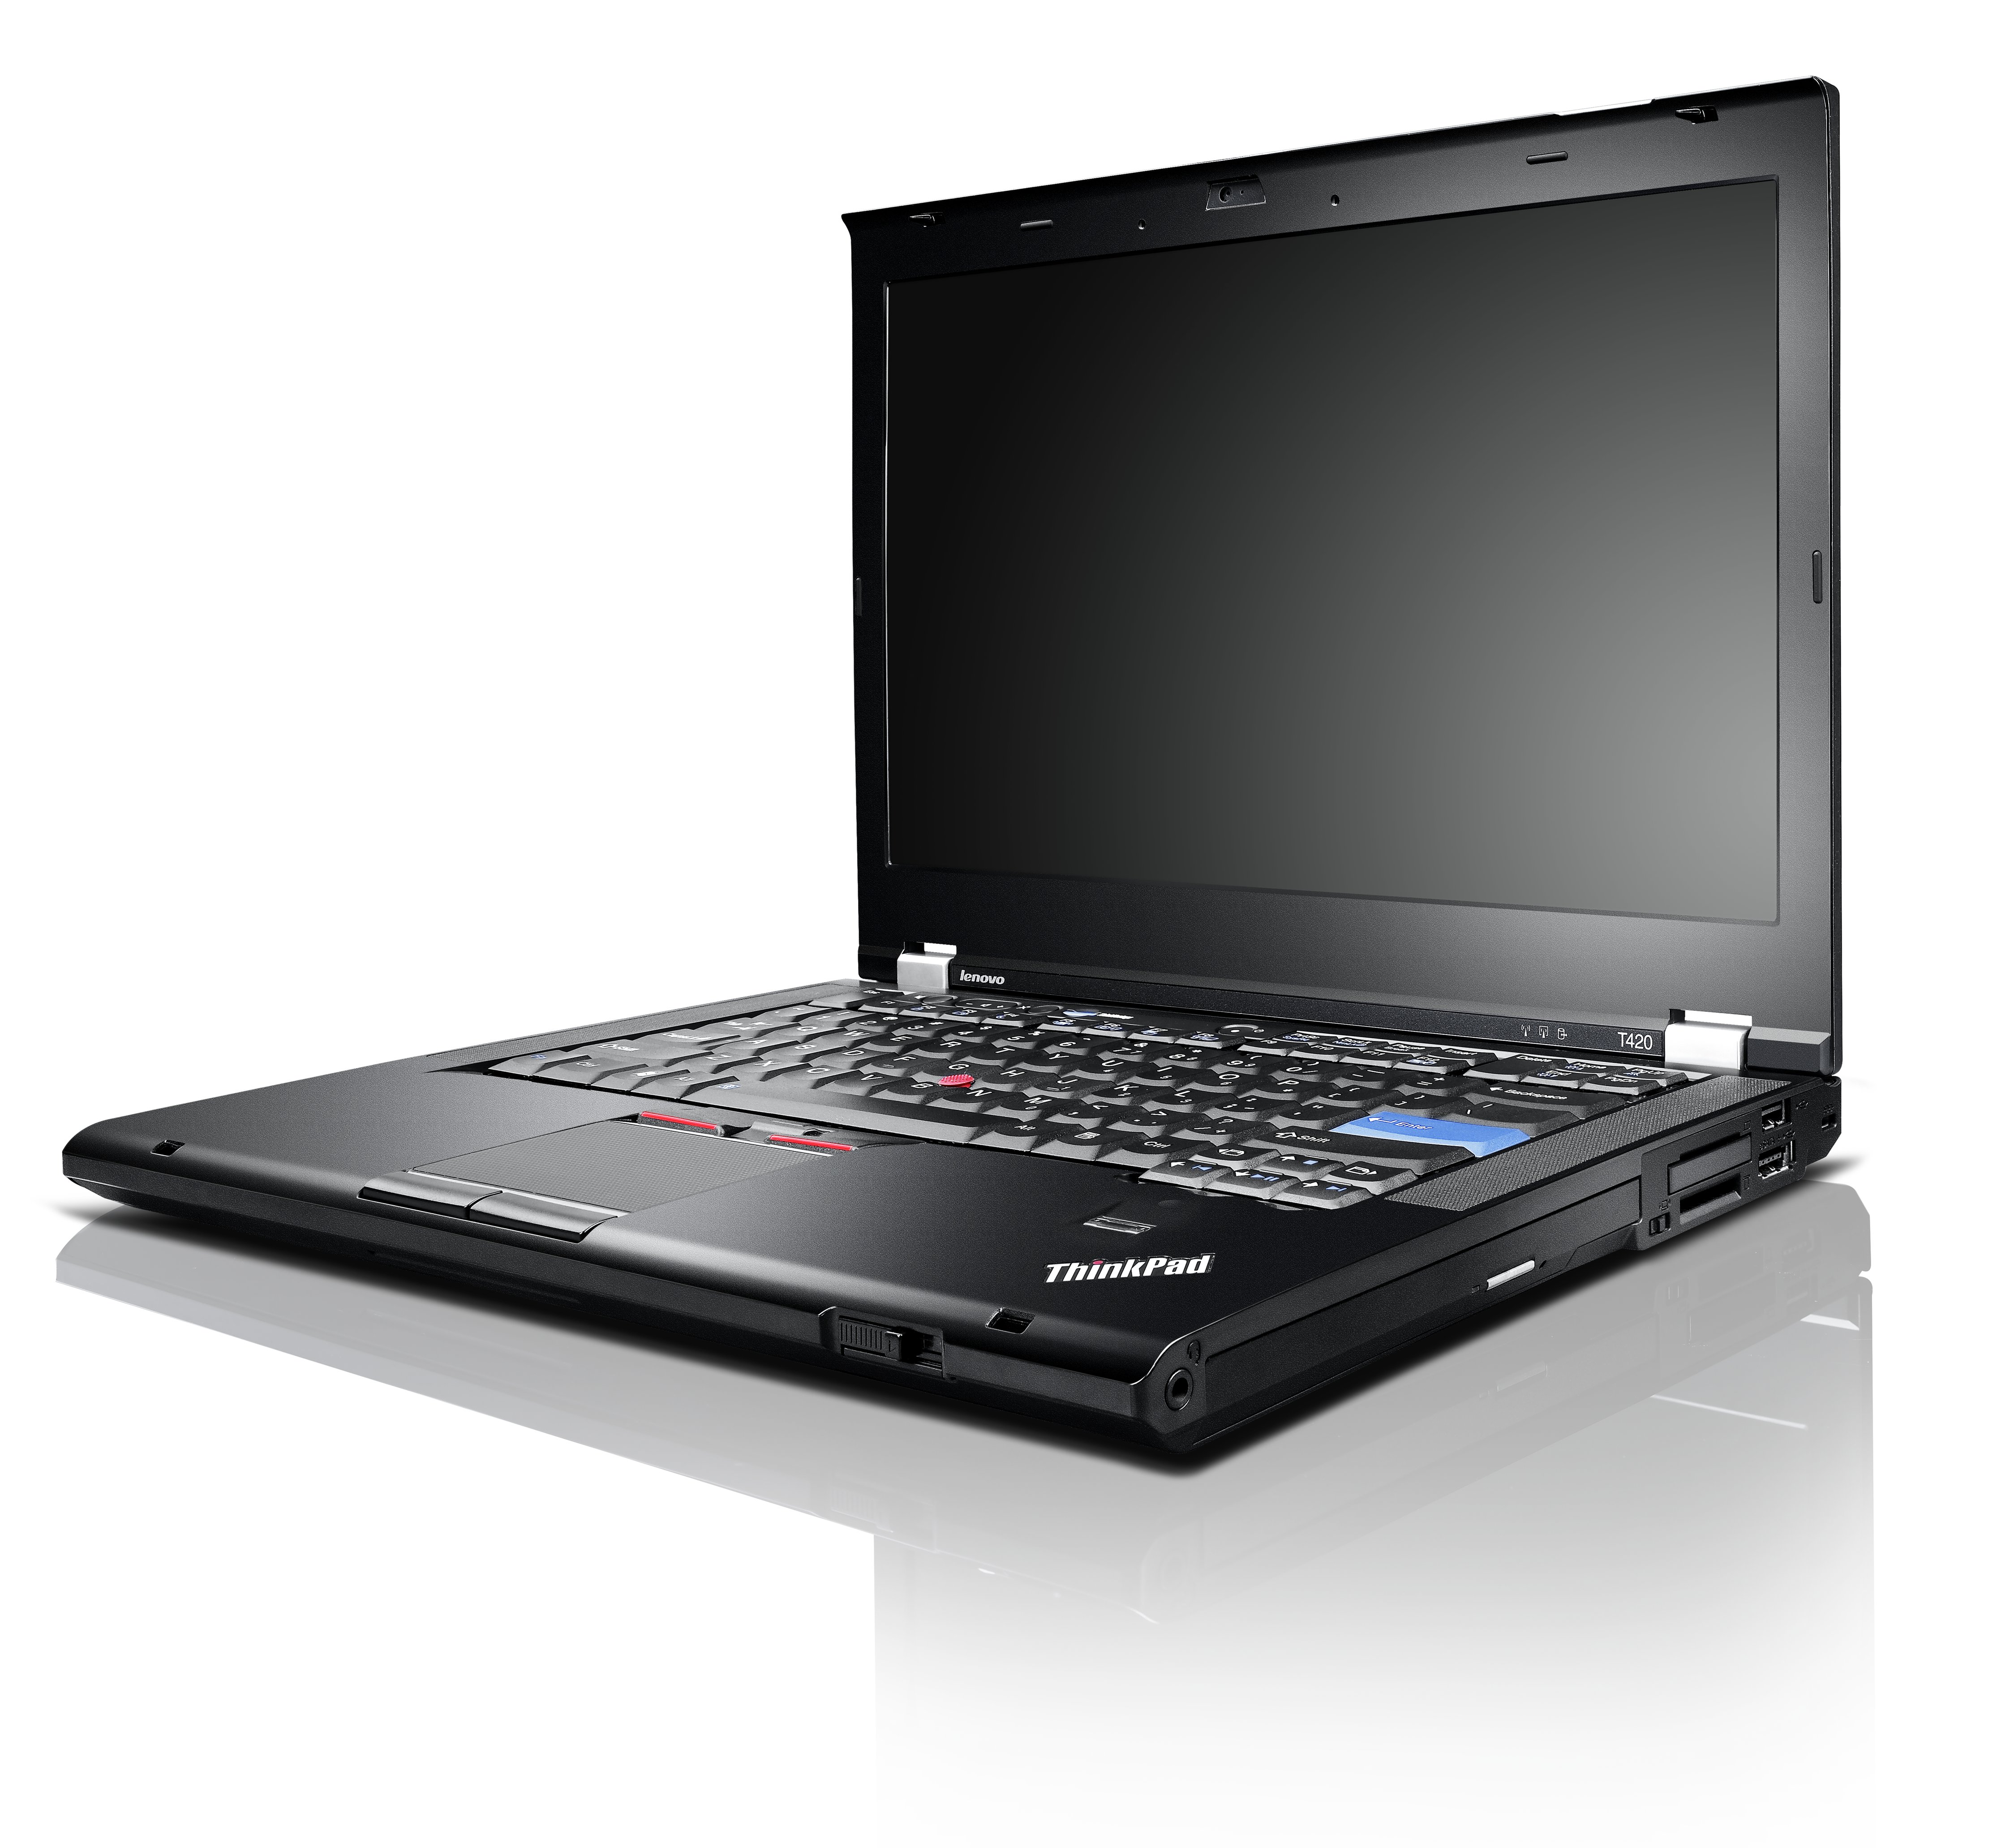 Etna ophobe foretrække Lenovo ThinkPad T420 Details, Specs and Photos